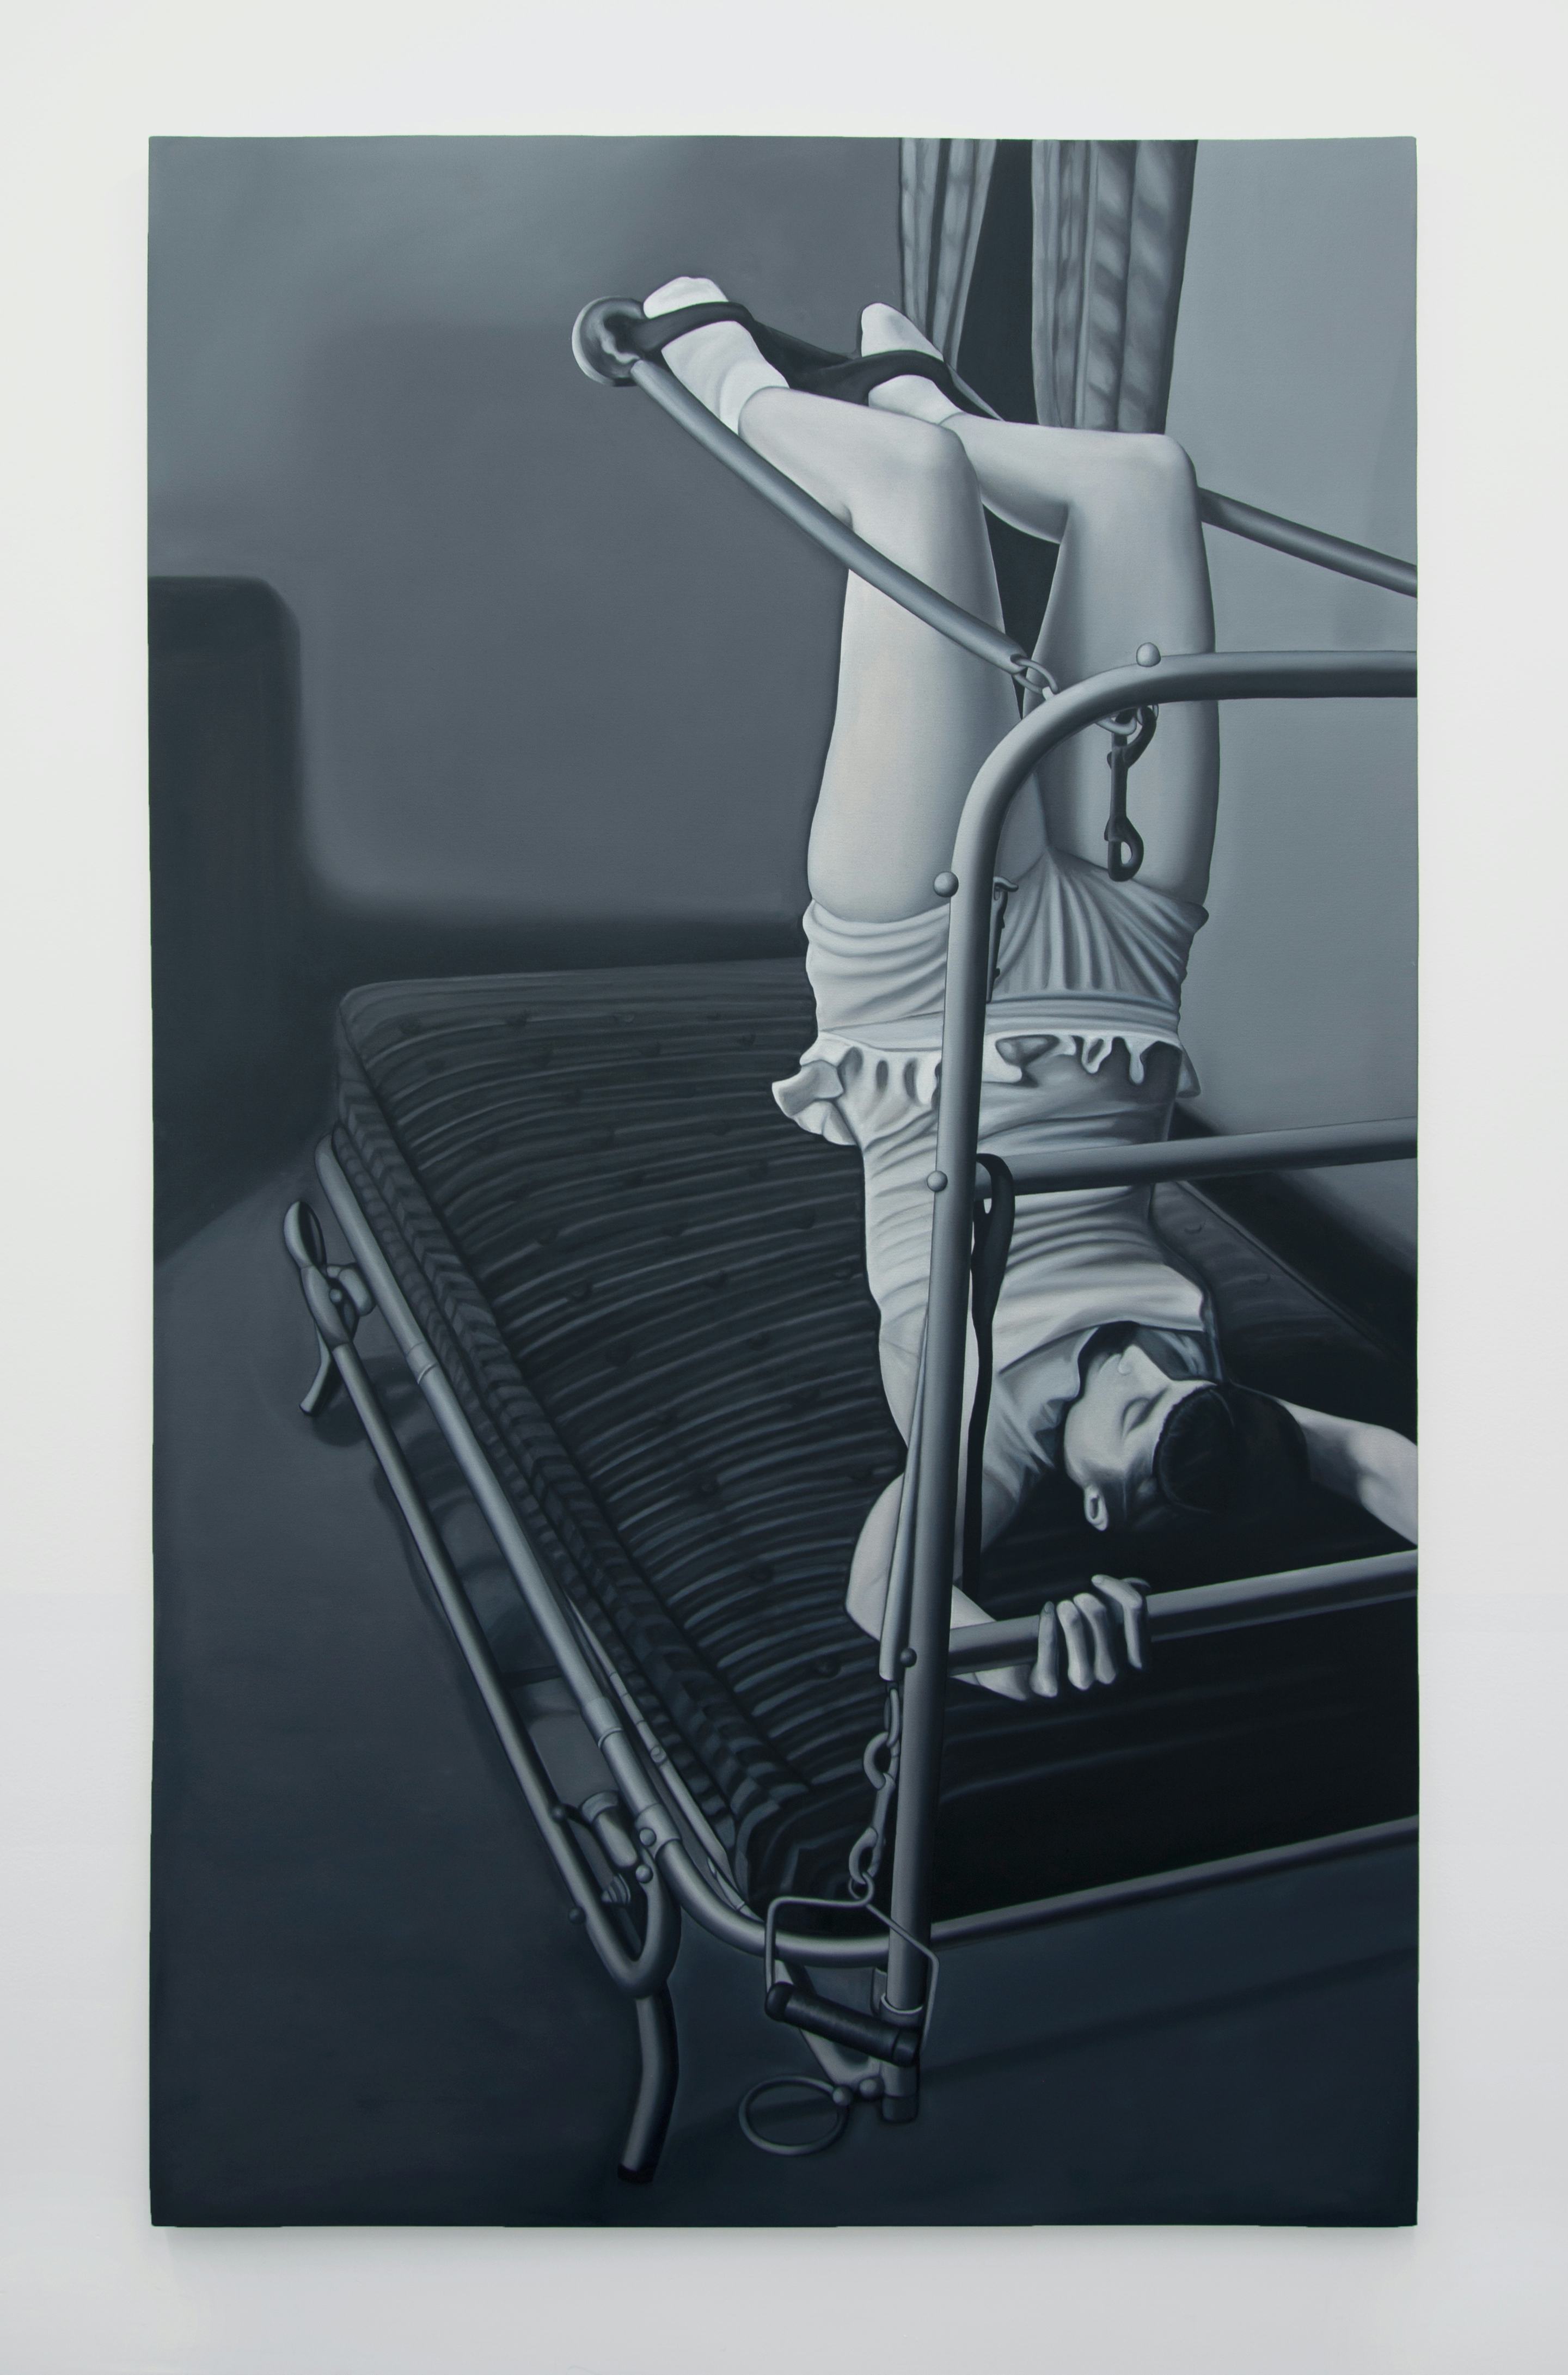 Megan Marrin
Bednasium (2021)
Oil on canvas on Styrofoam
78.74h x 47.24w inches (200h x120w cm)
